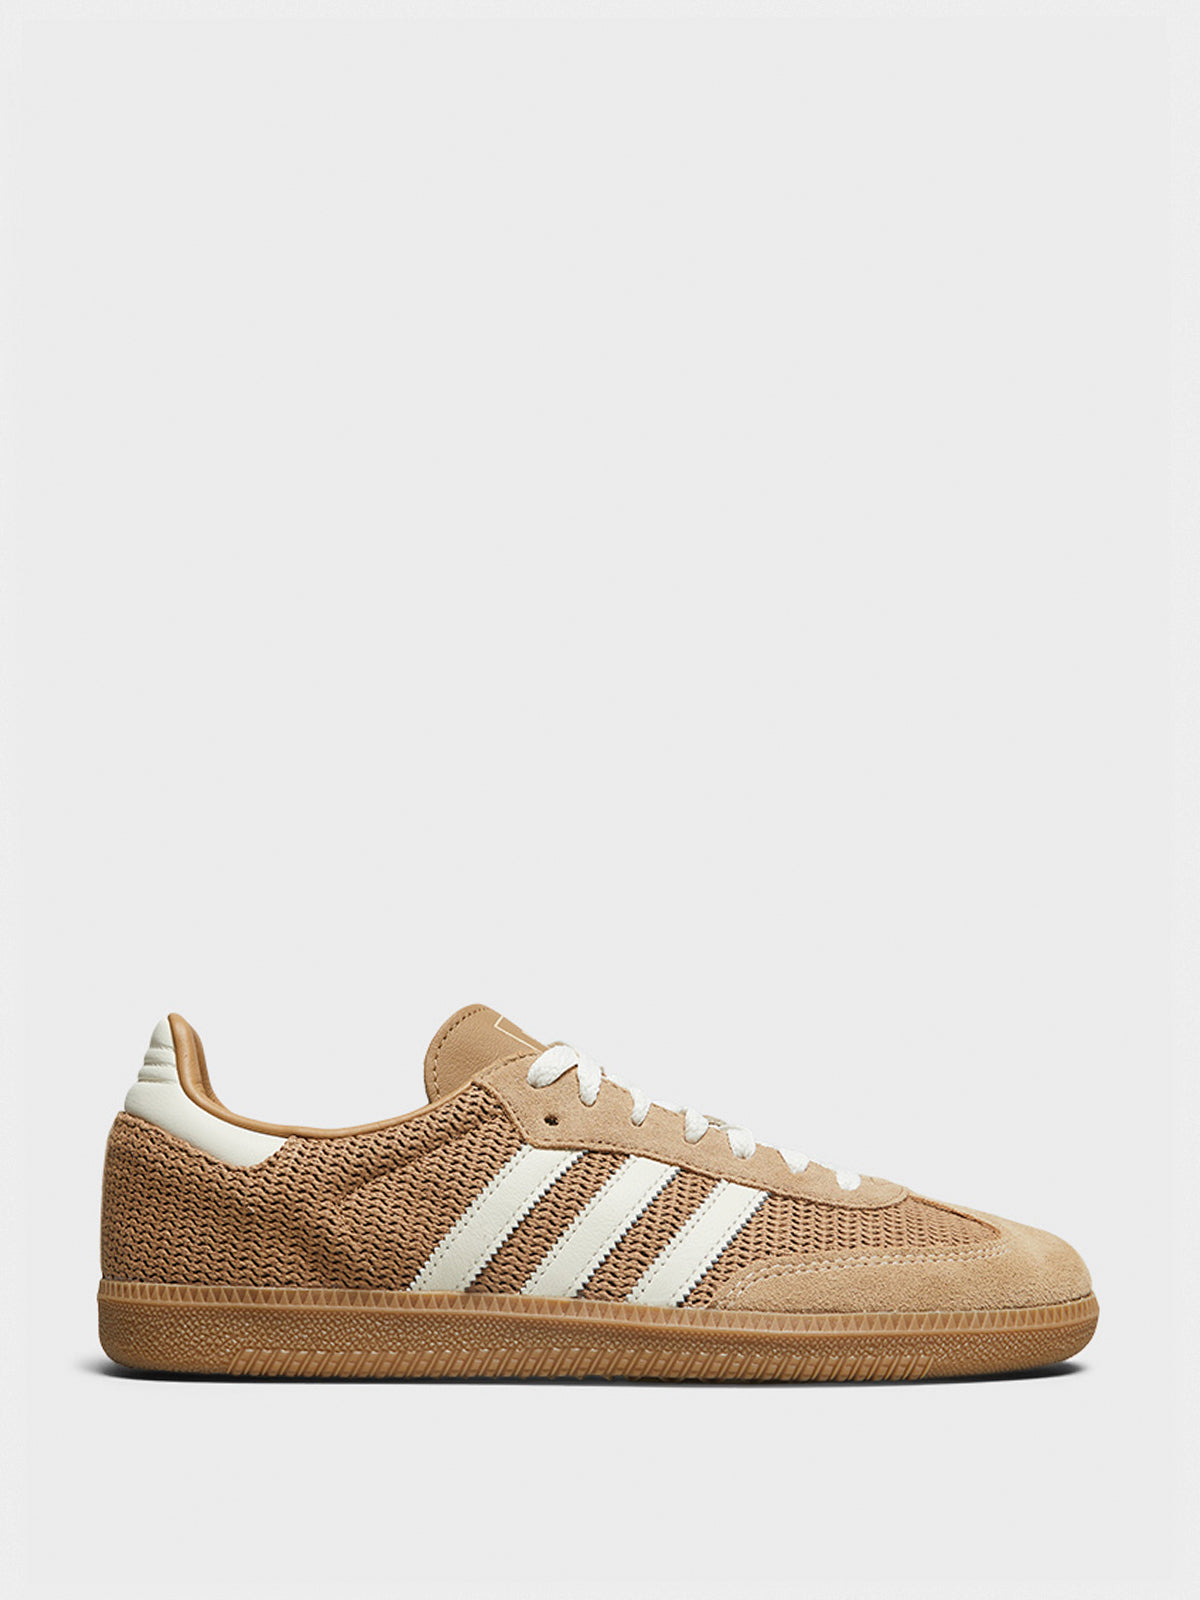 Adidas - Samba OG Sneakers in Brown